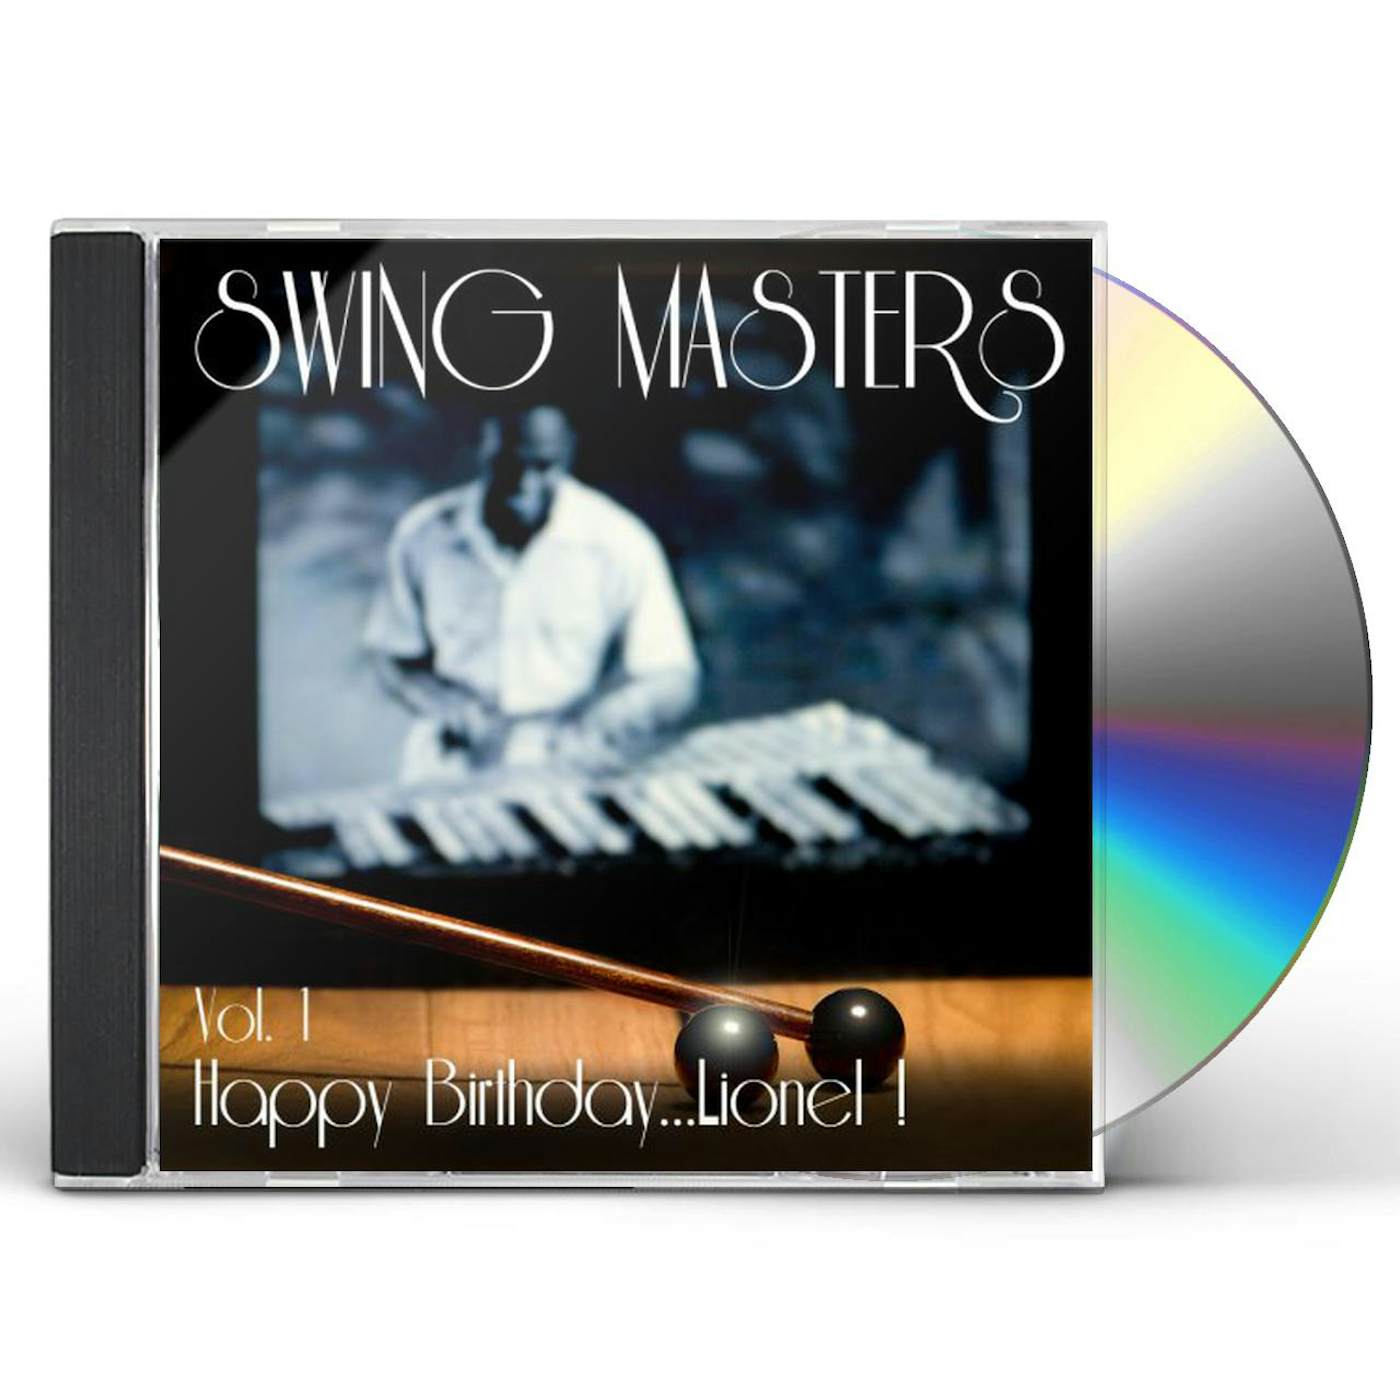 Swing Masters HAPPY BIRTHDAY LIONEL, VOL. 1 CD